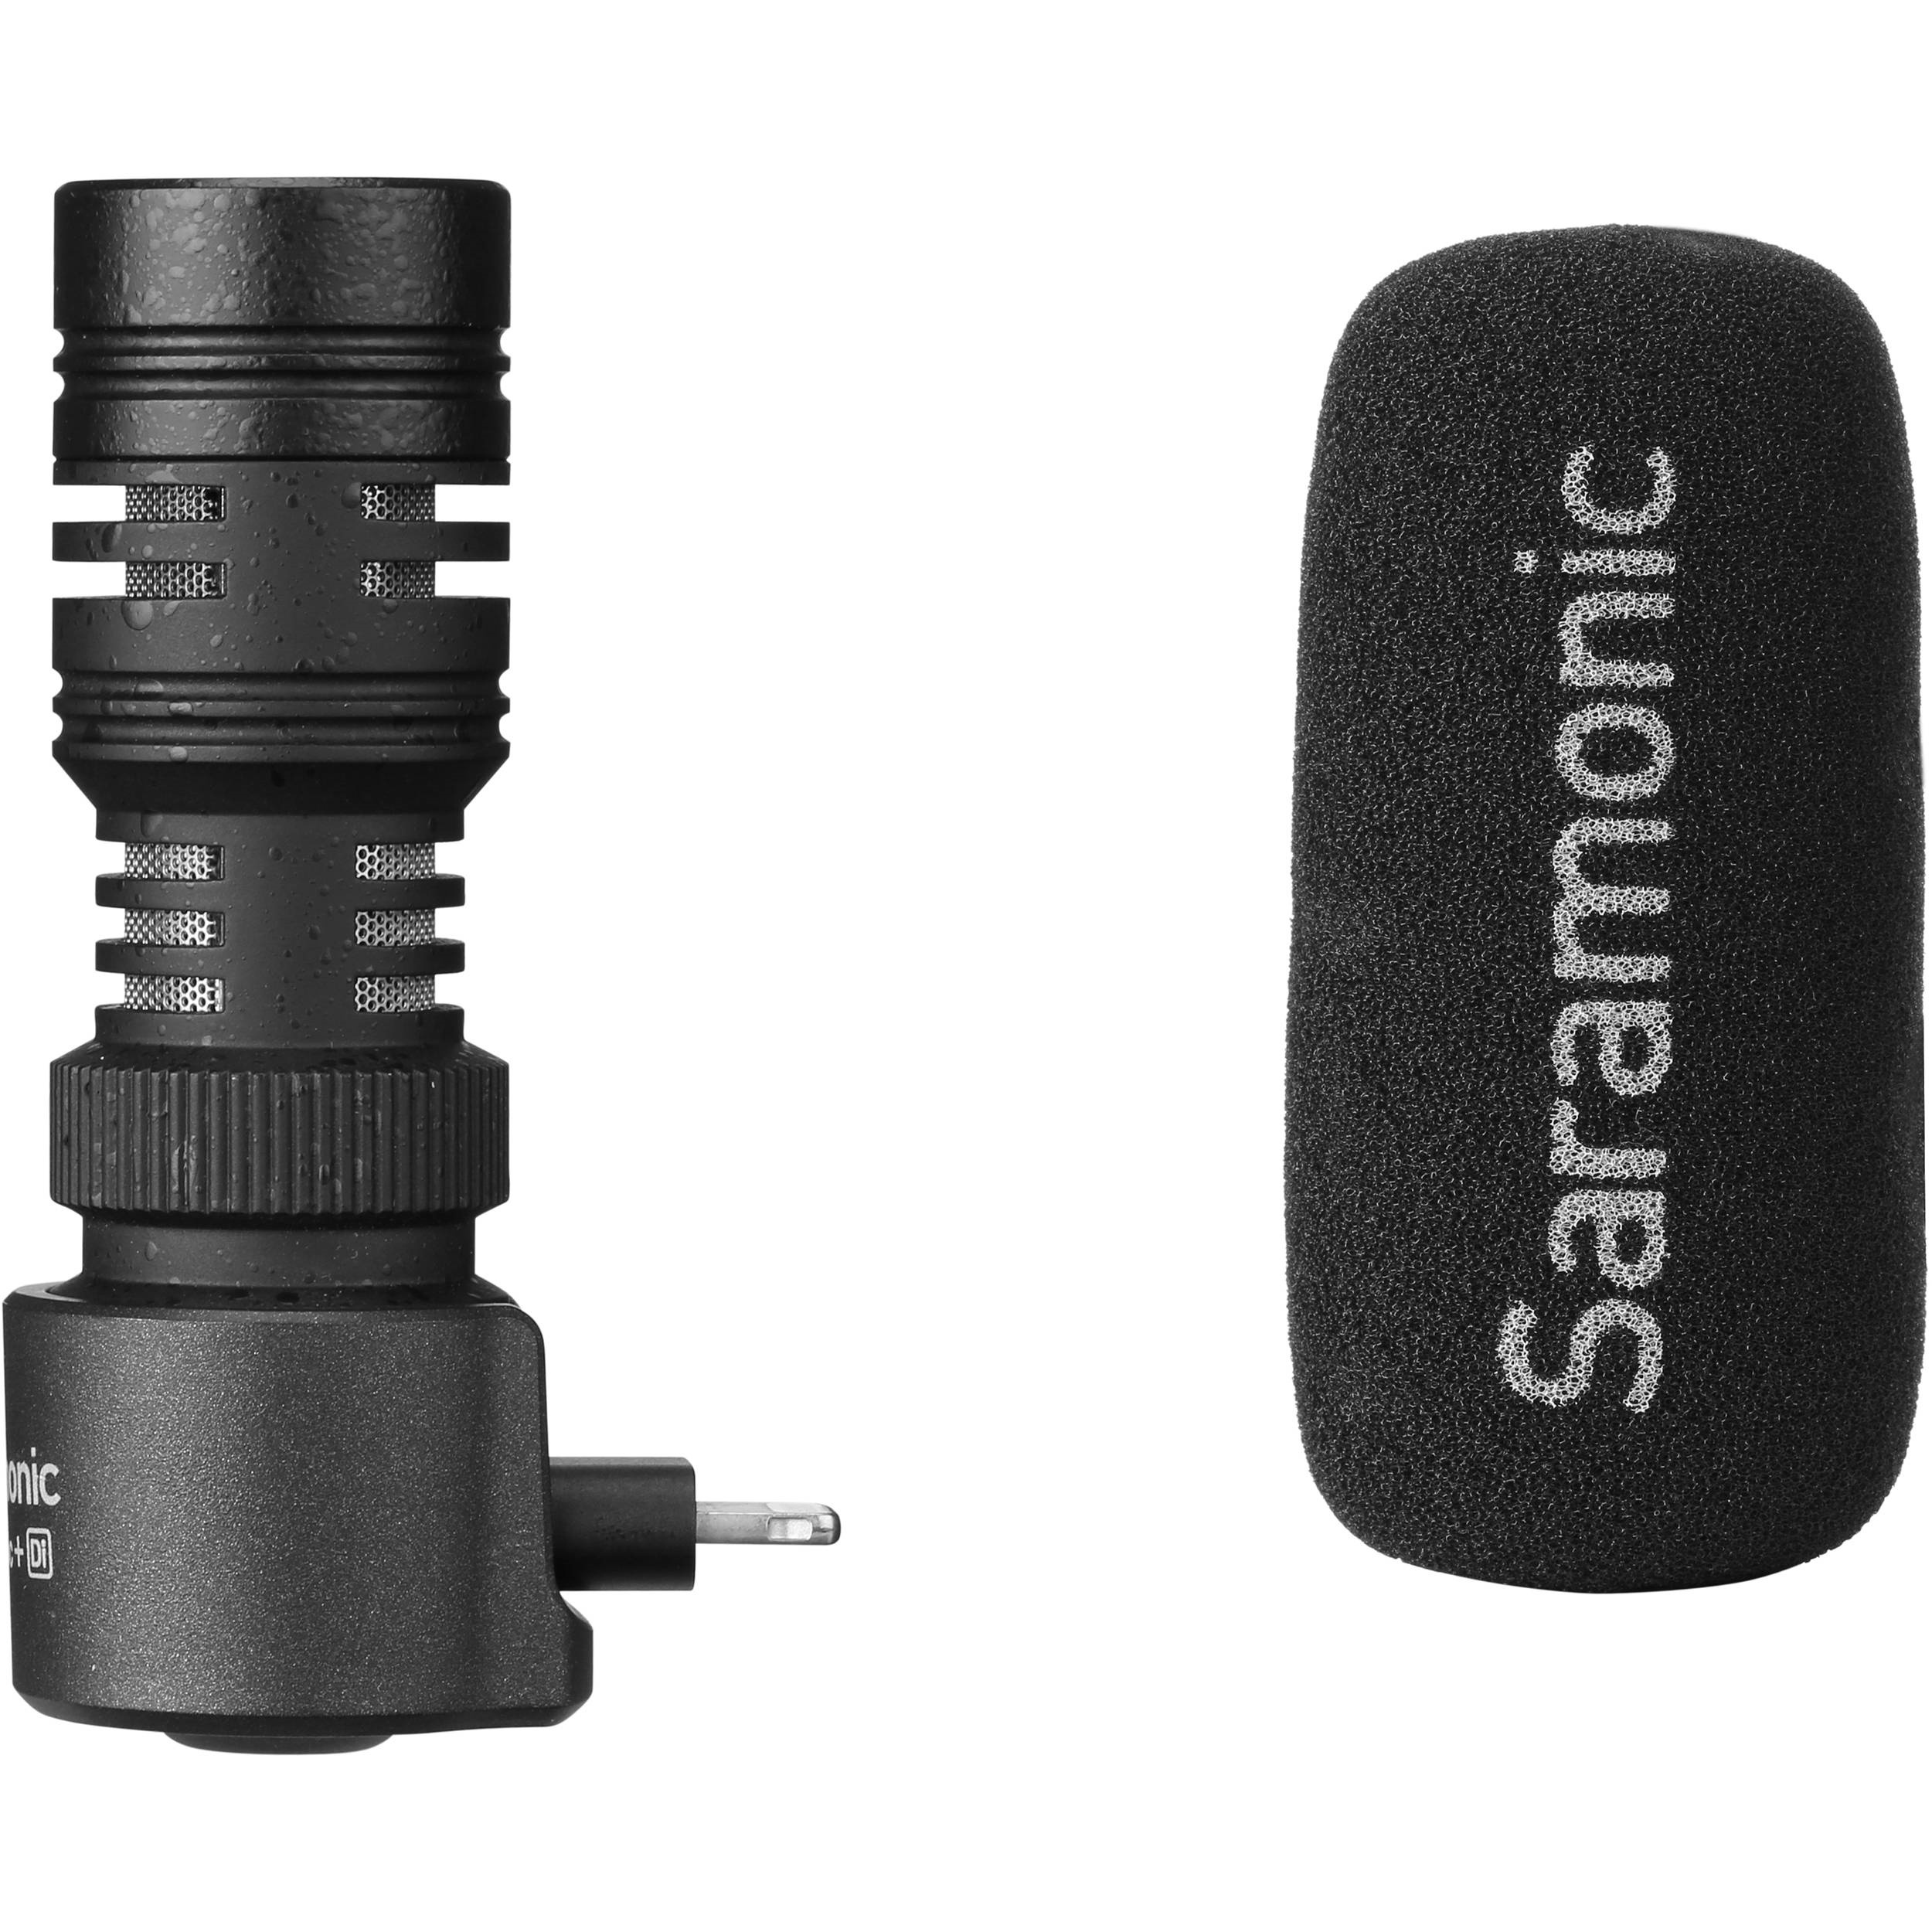 Saramonic SmartMic+ Di Compact Directional Microphone - Open Box Special